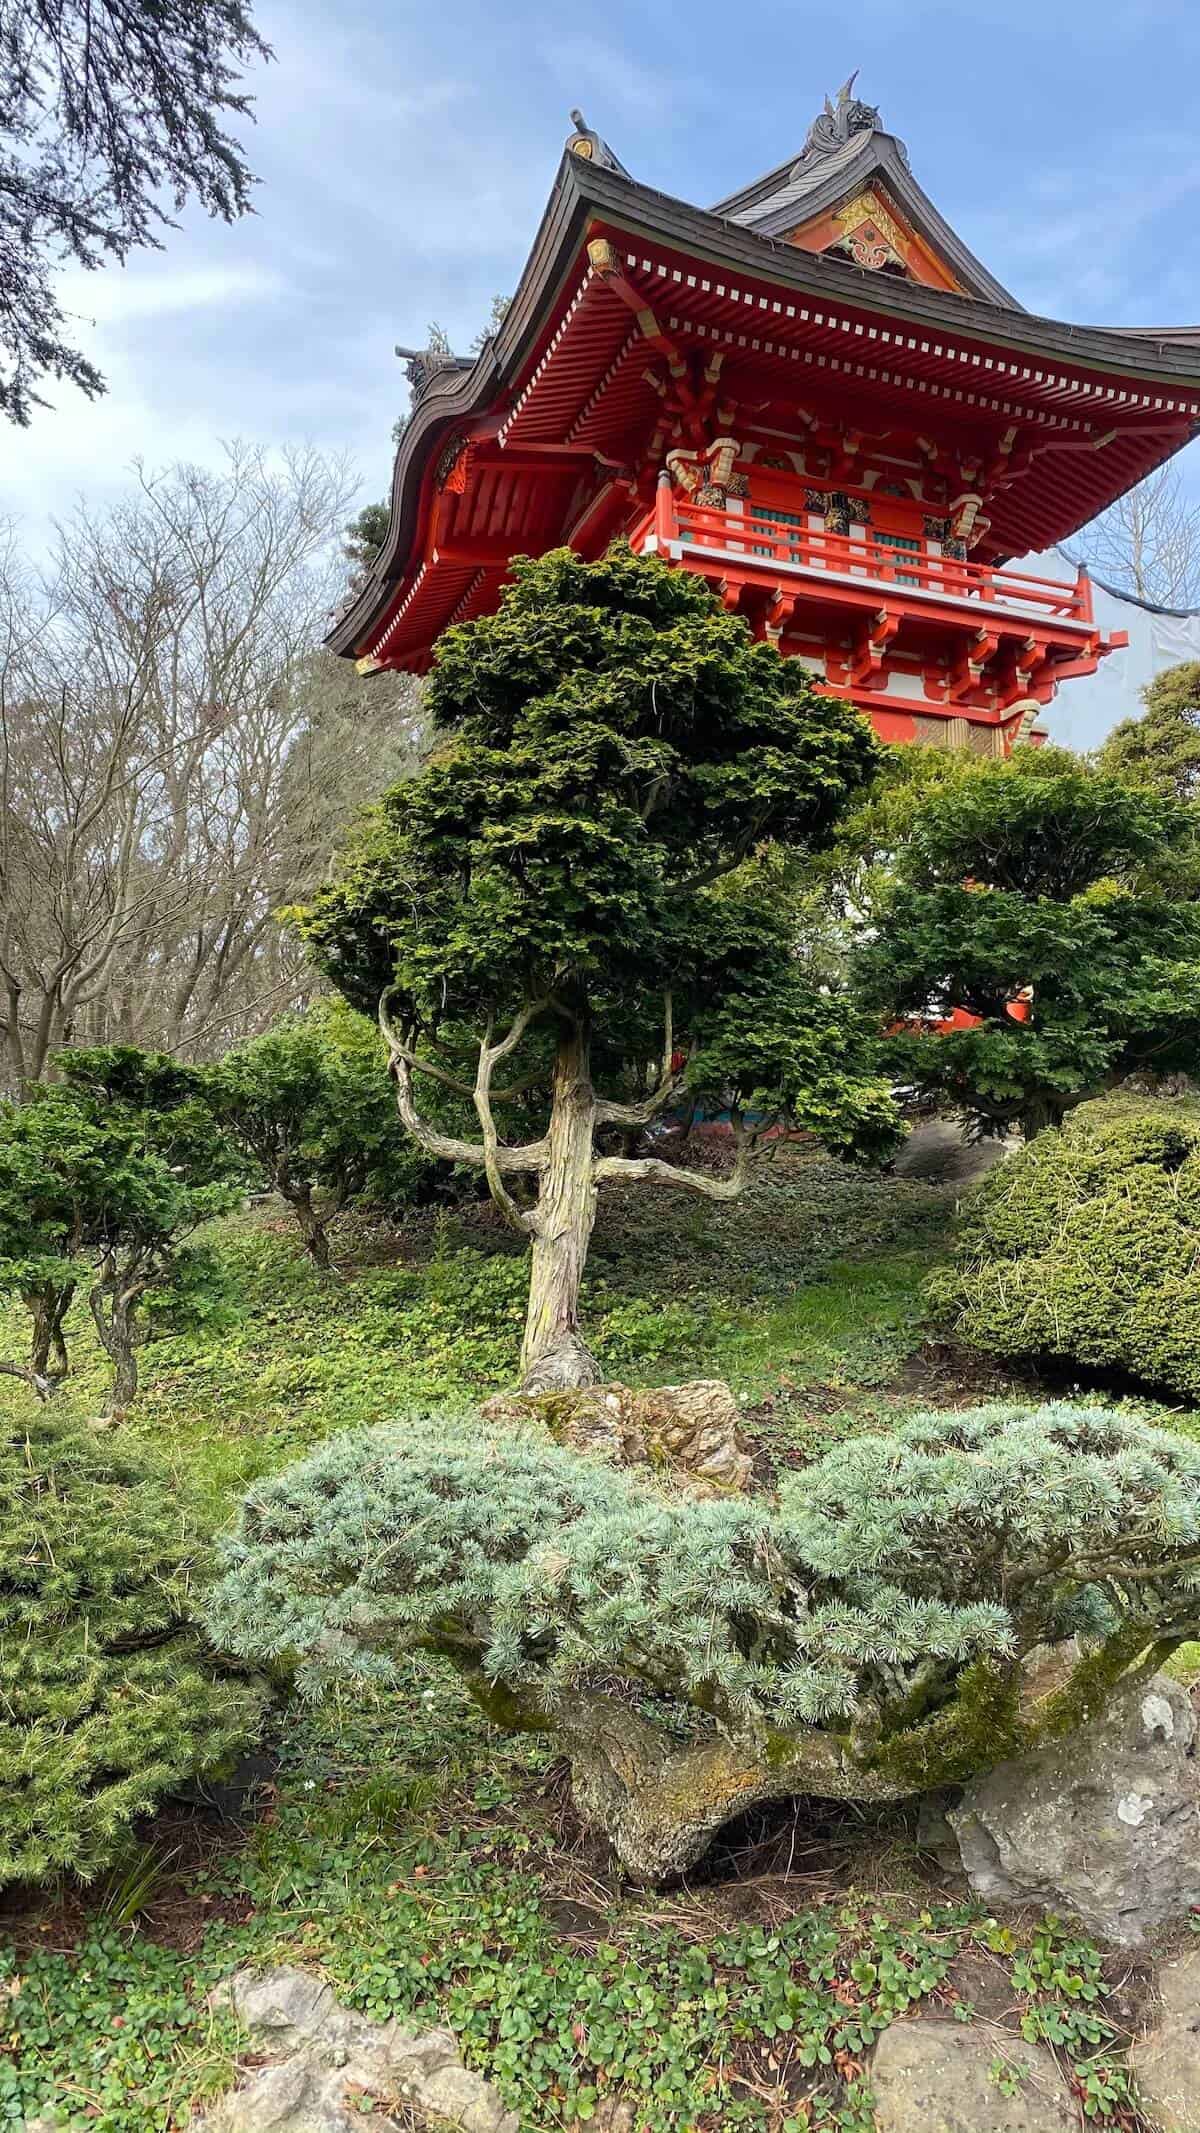 The pagoda at the Japanese Tea Garden in Golden Gate Park